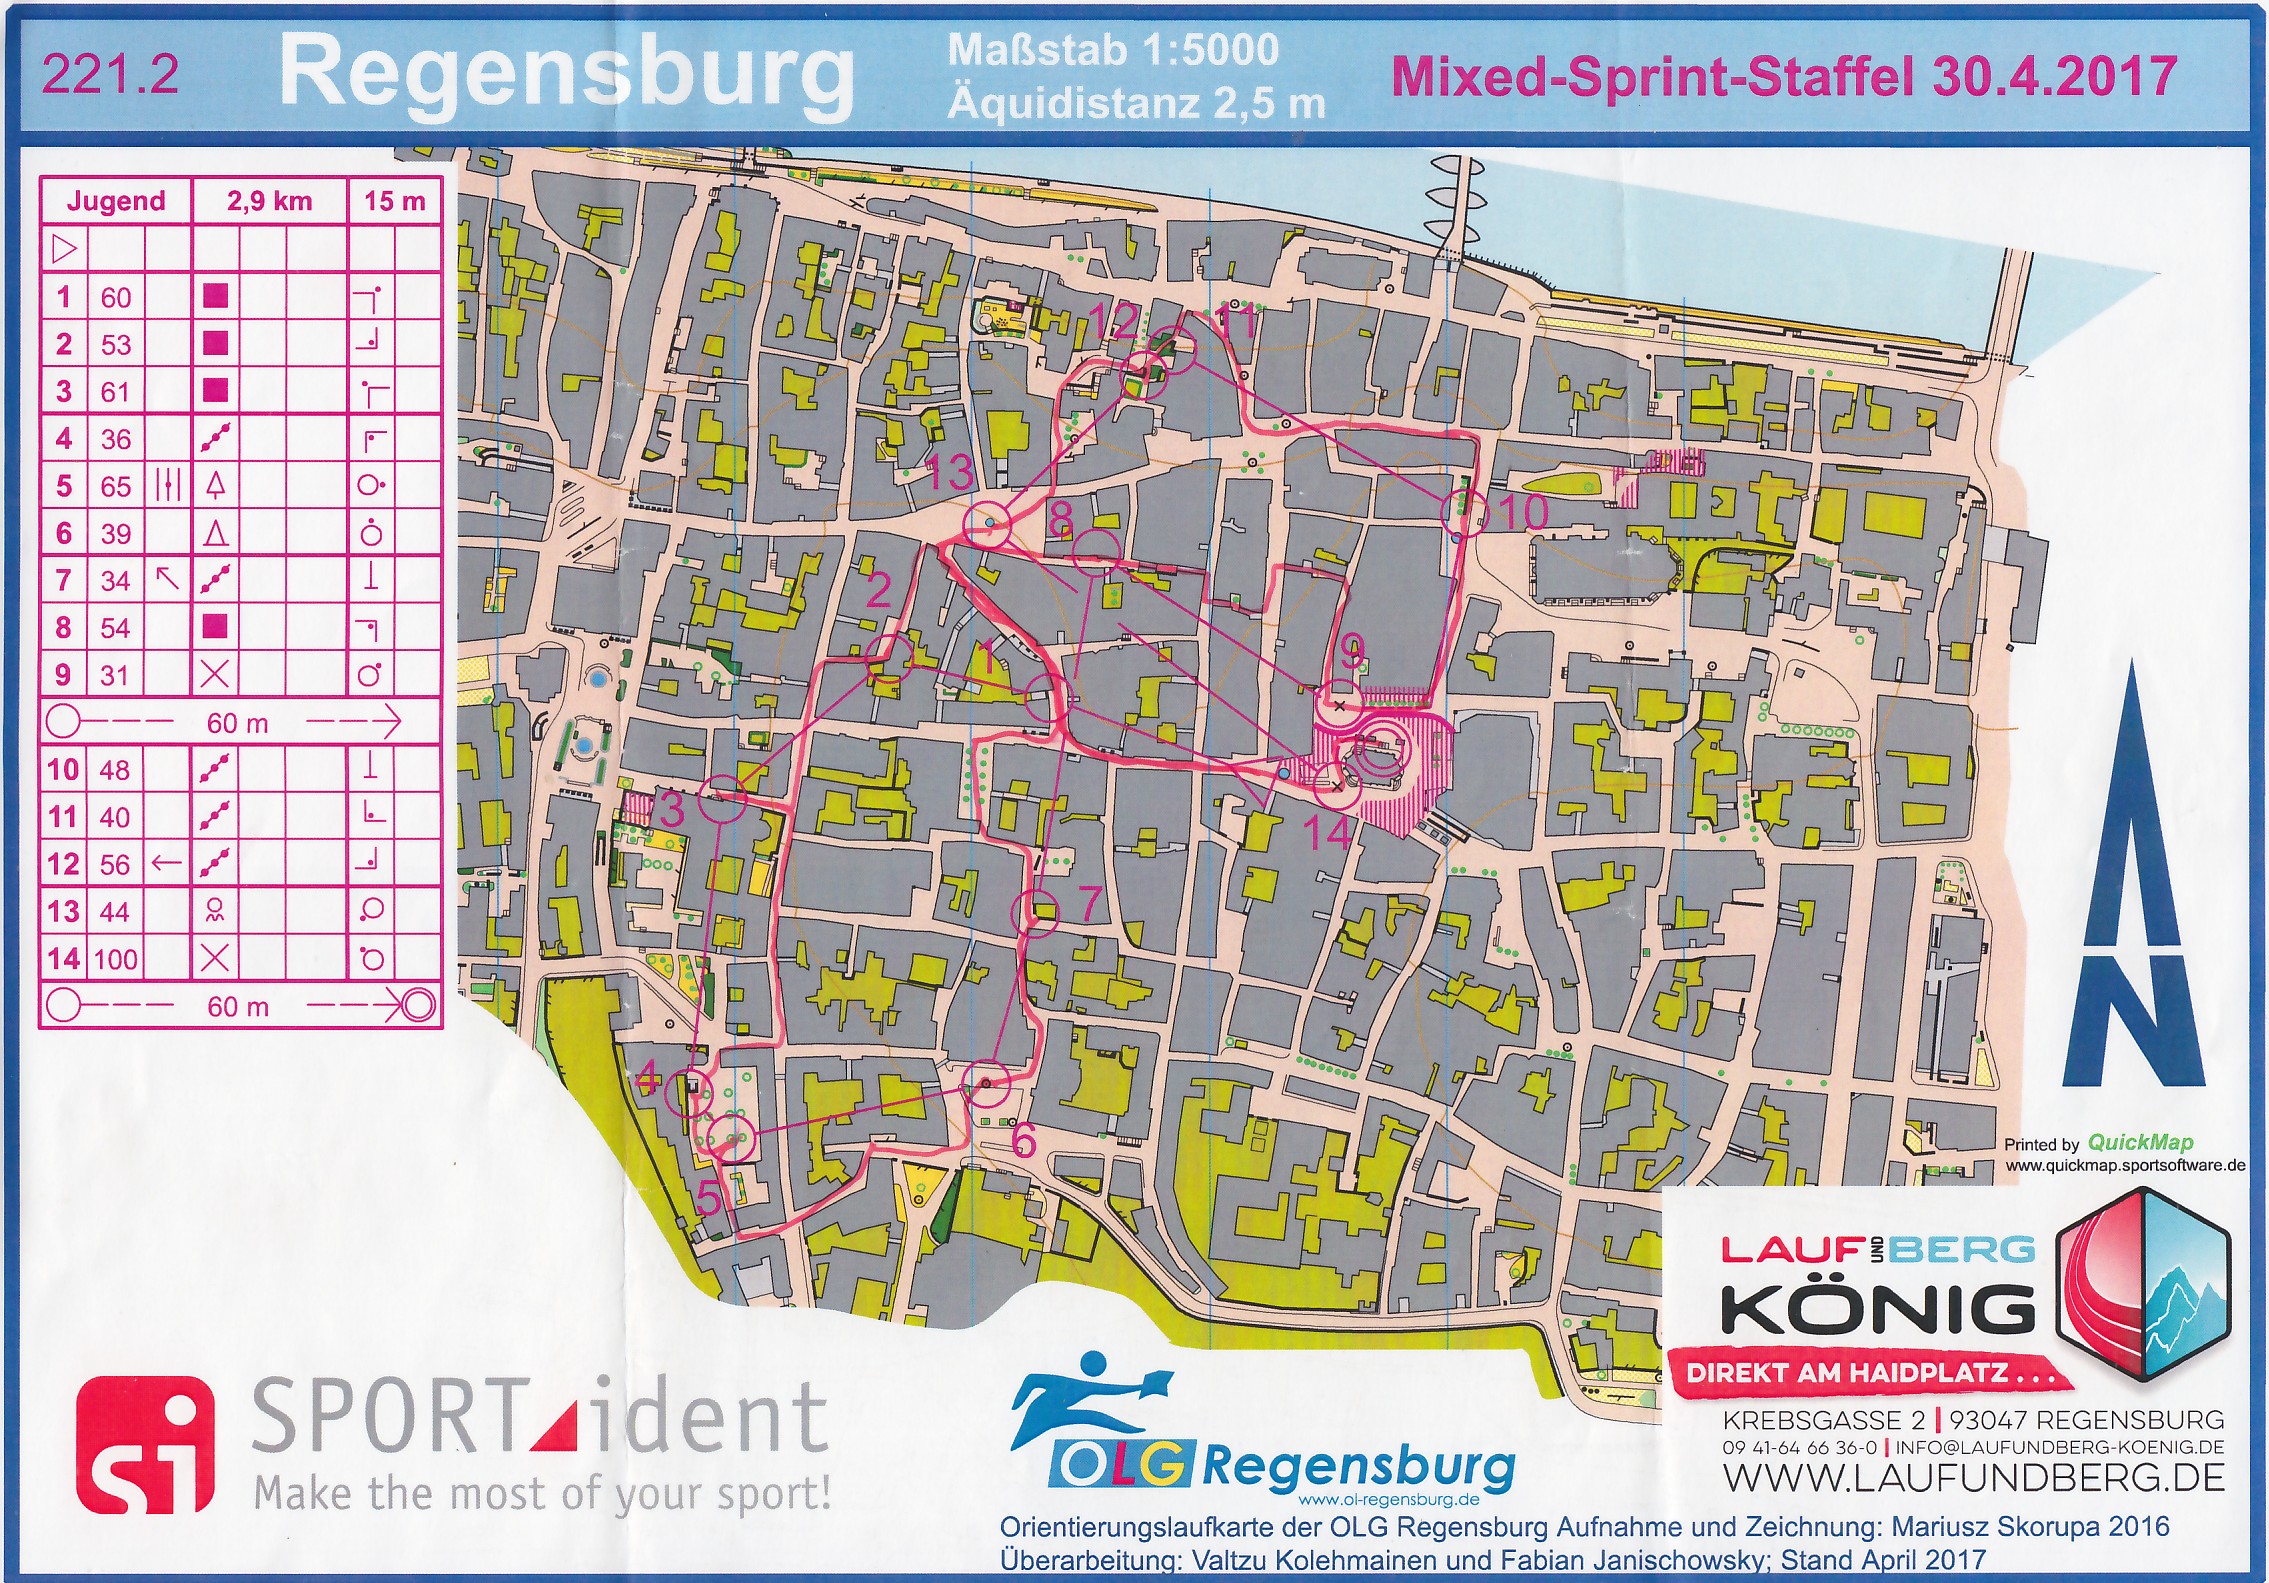 Sprint-Staffel in Regensburg (2017-04-30)